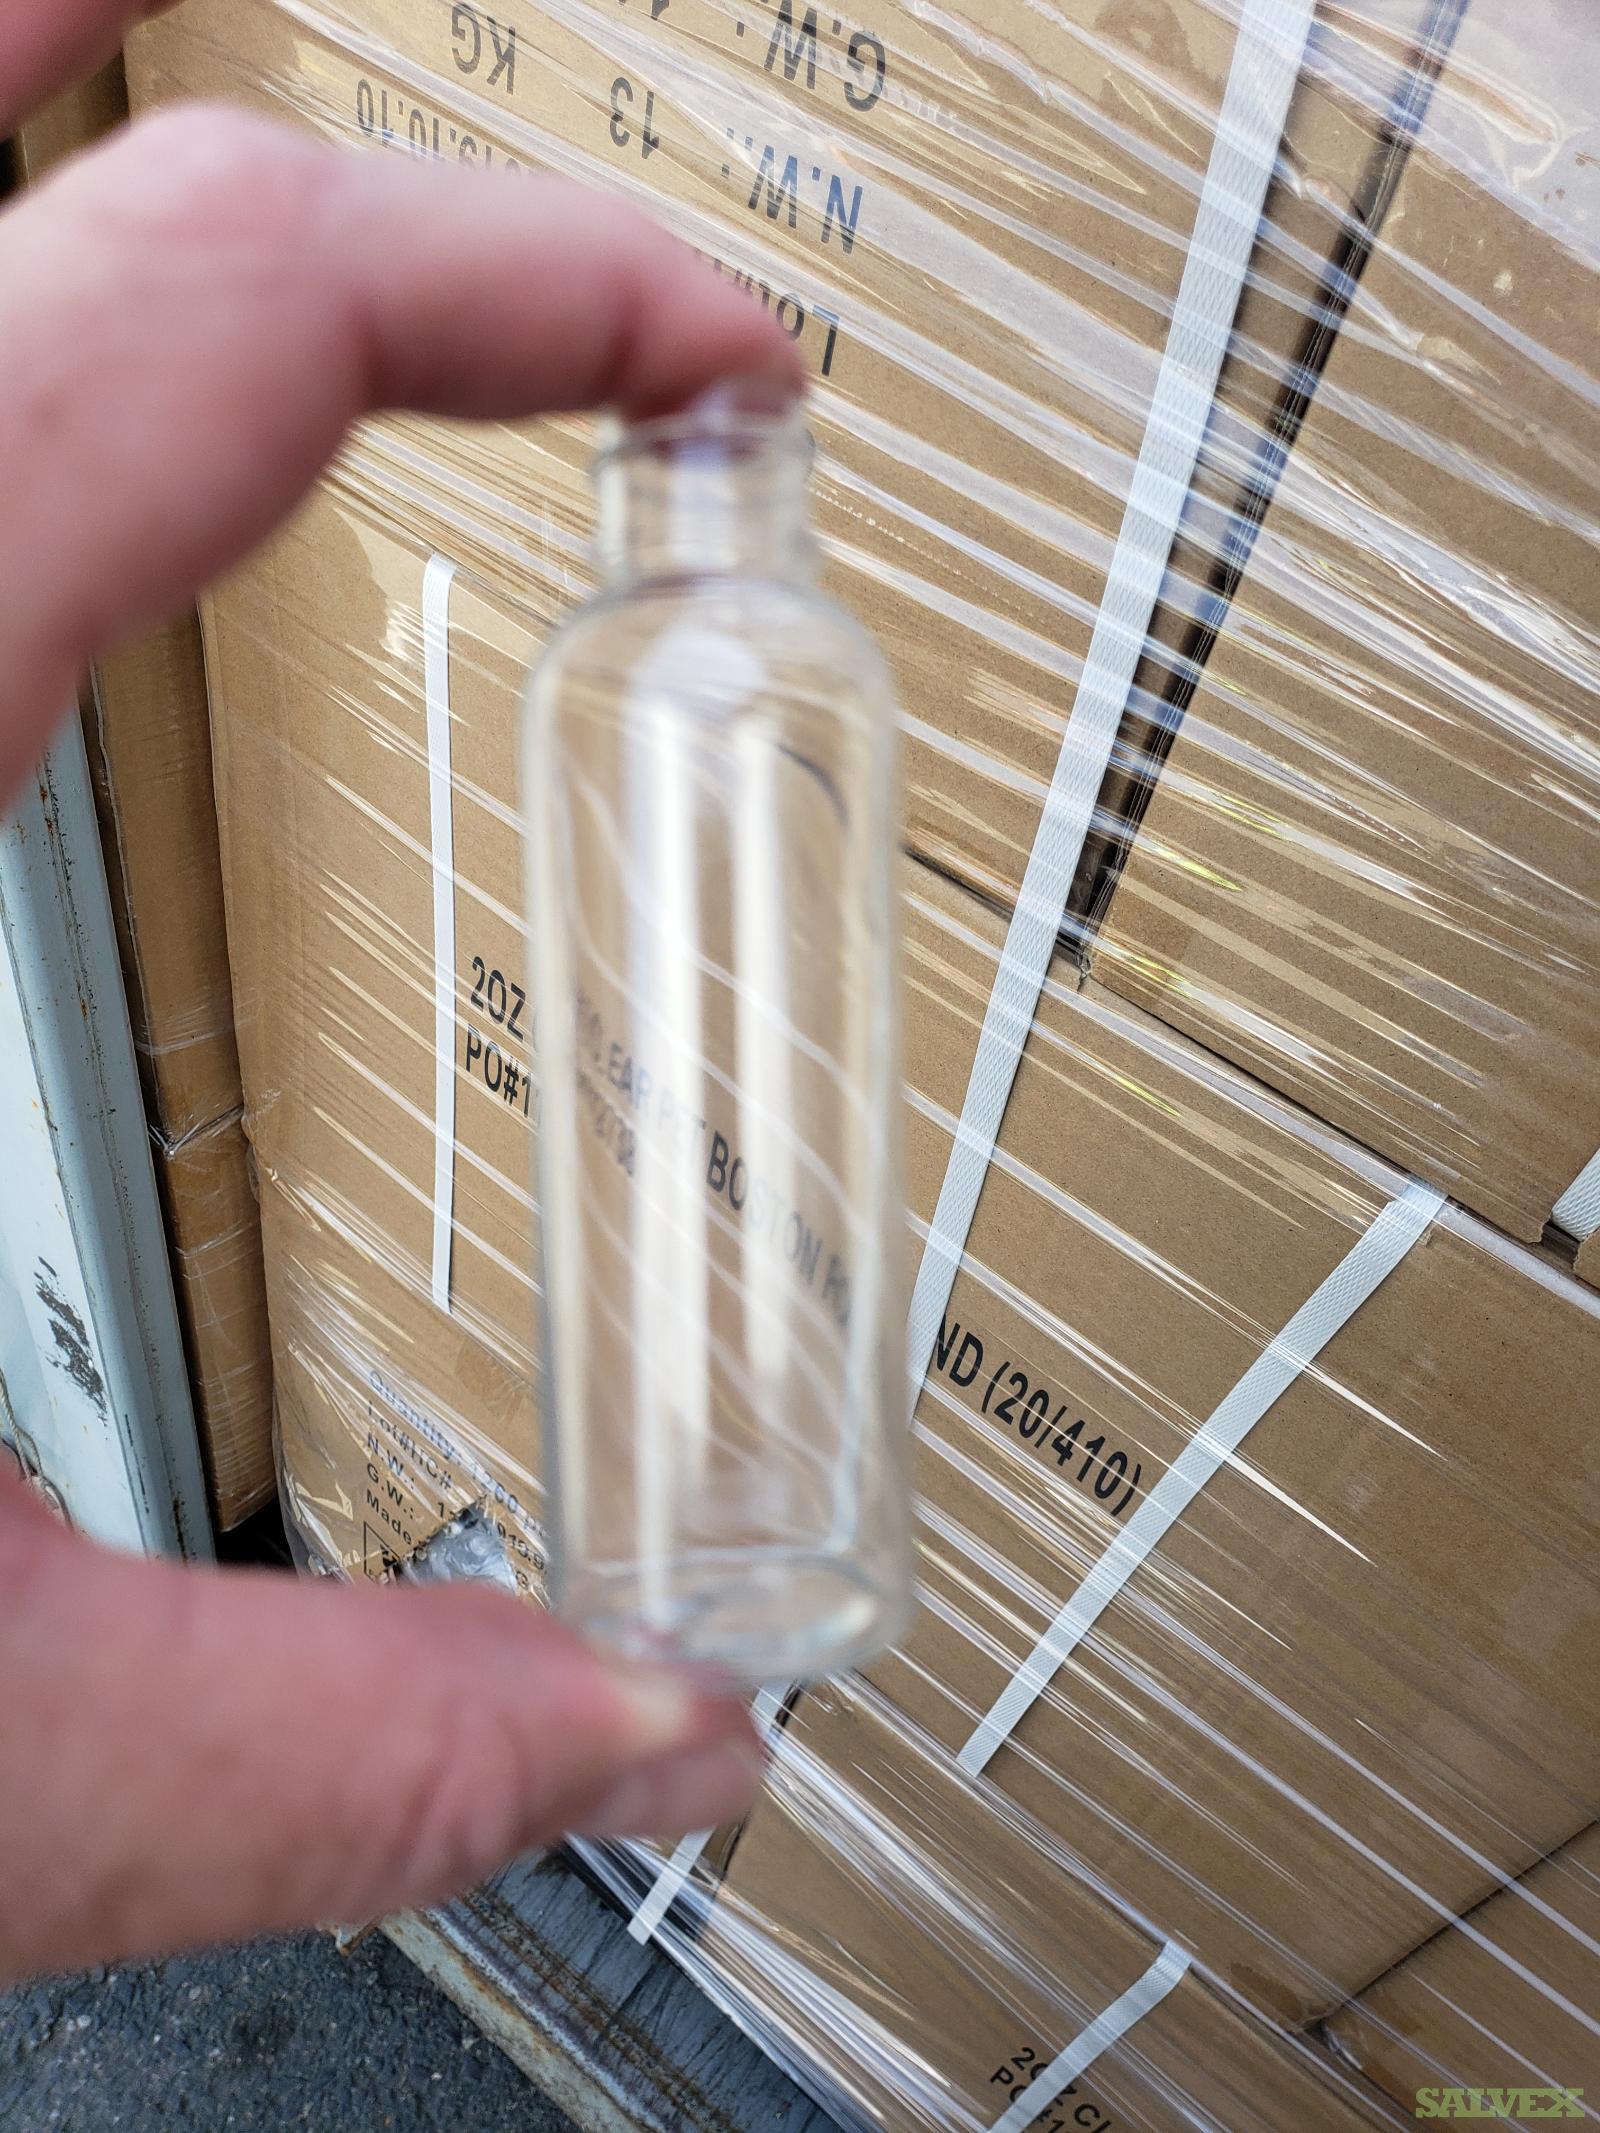 1 oz. Black 20-410 Round Bullet PET Opaque Plastic Bottle with